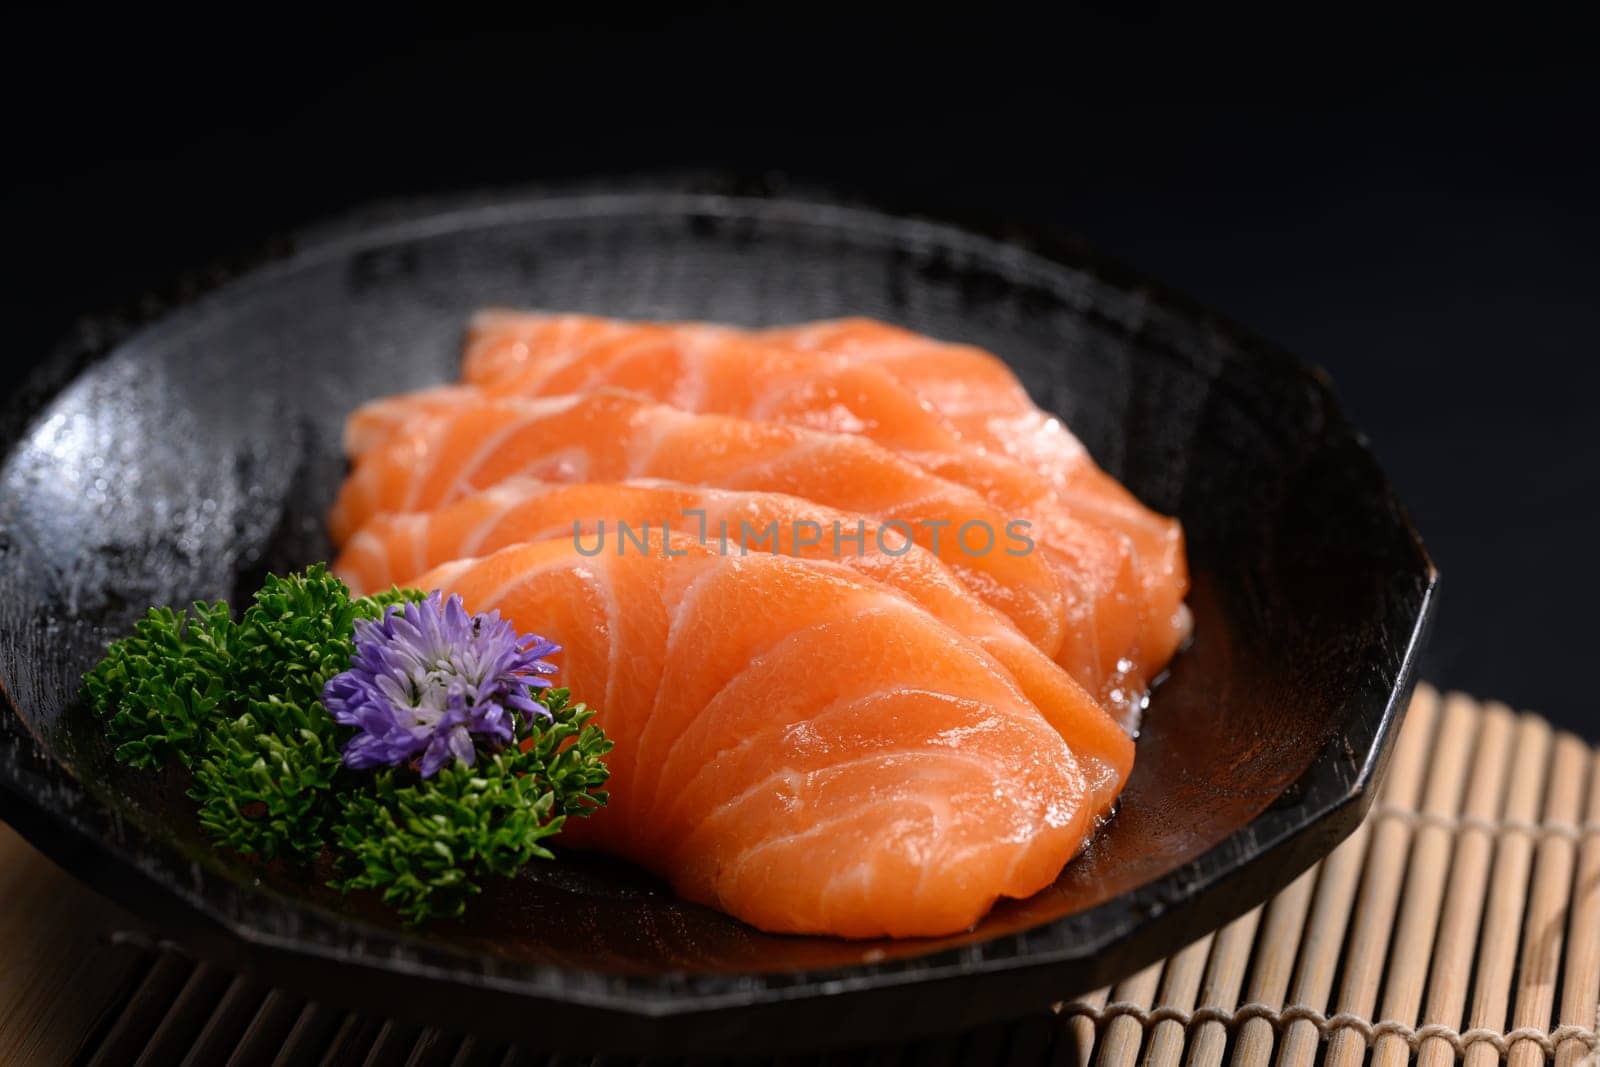 Salmon sashimi on black plate with parsley leaf. Japanese food style by prathanchorruangsak